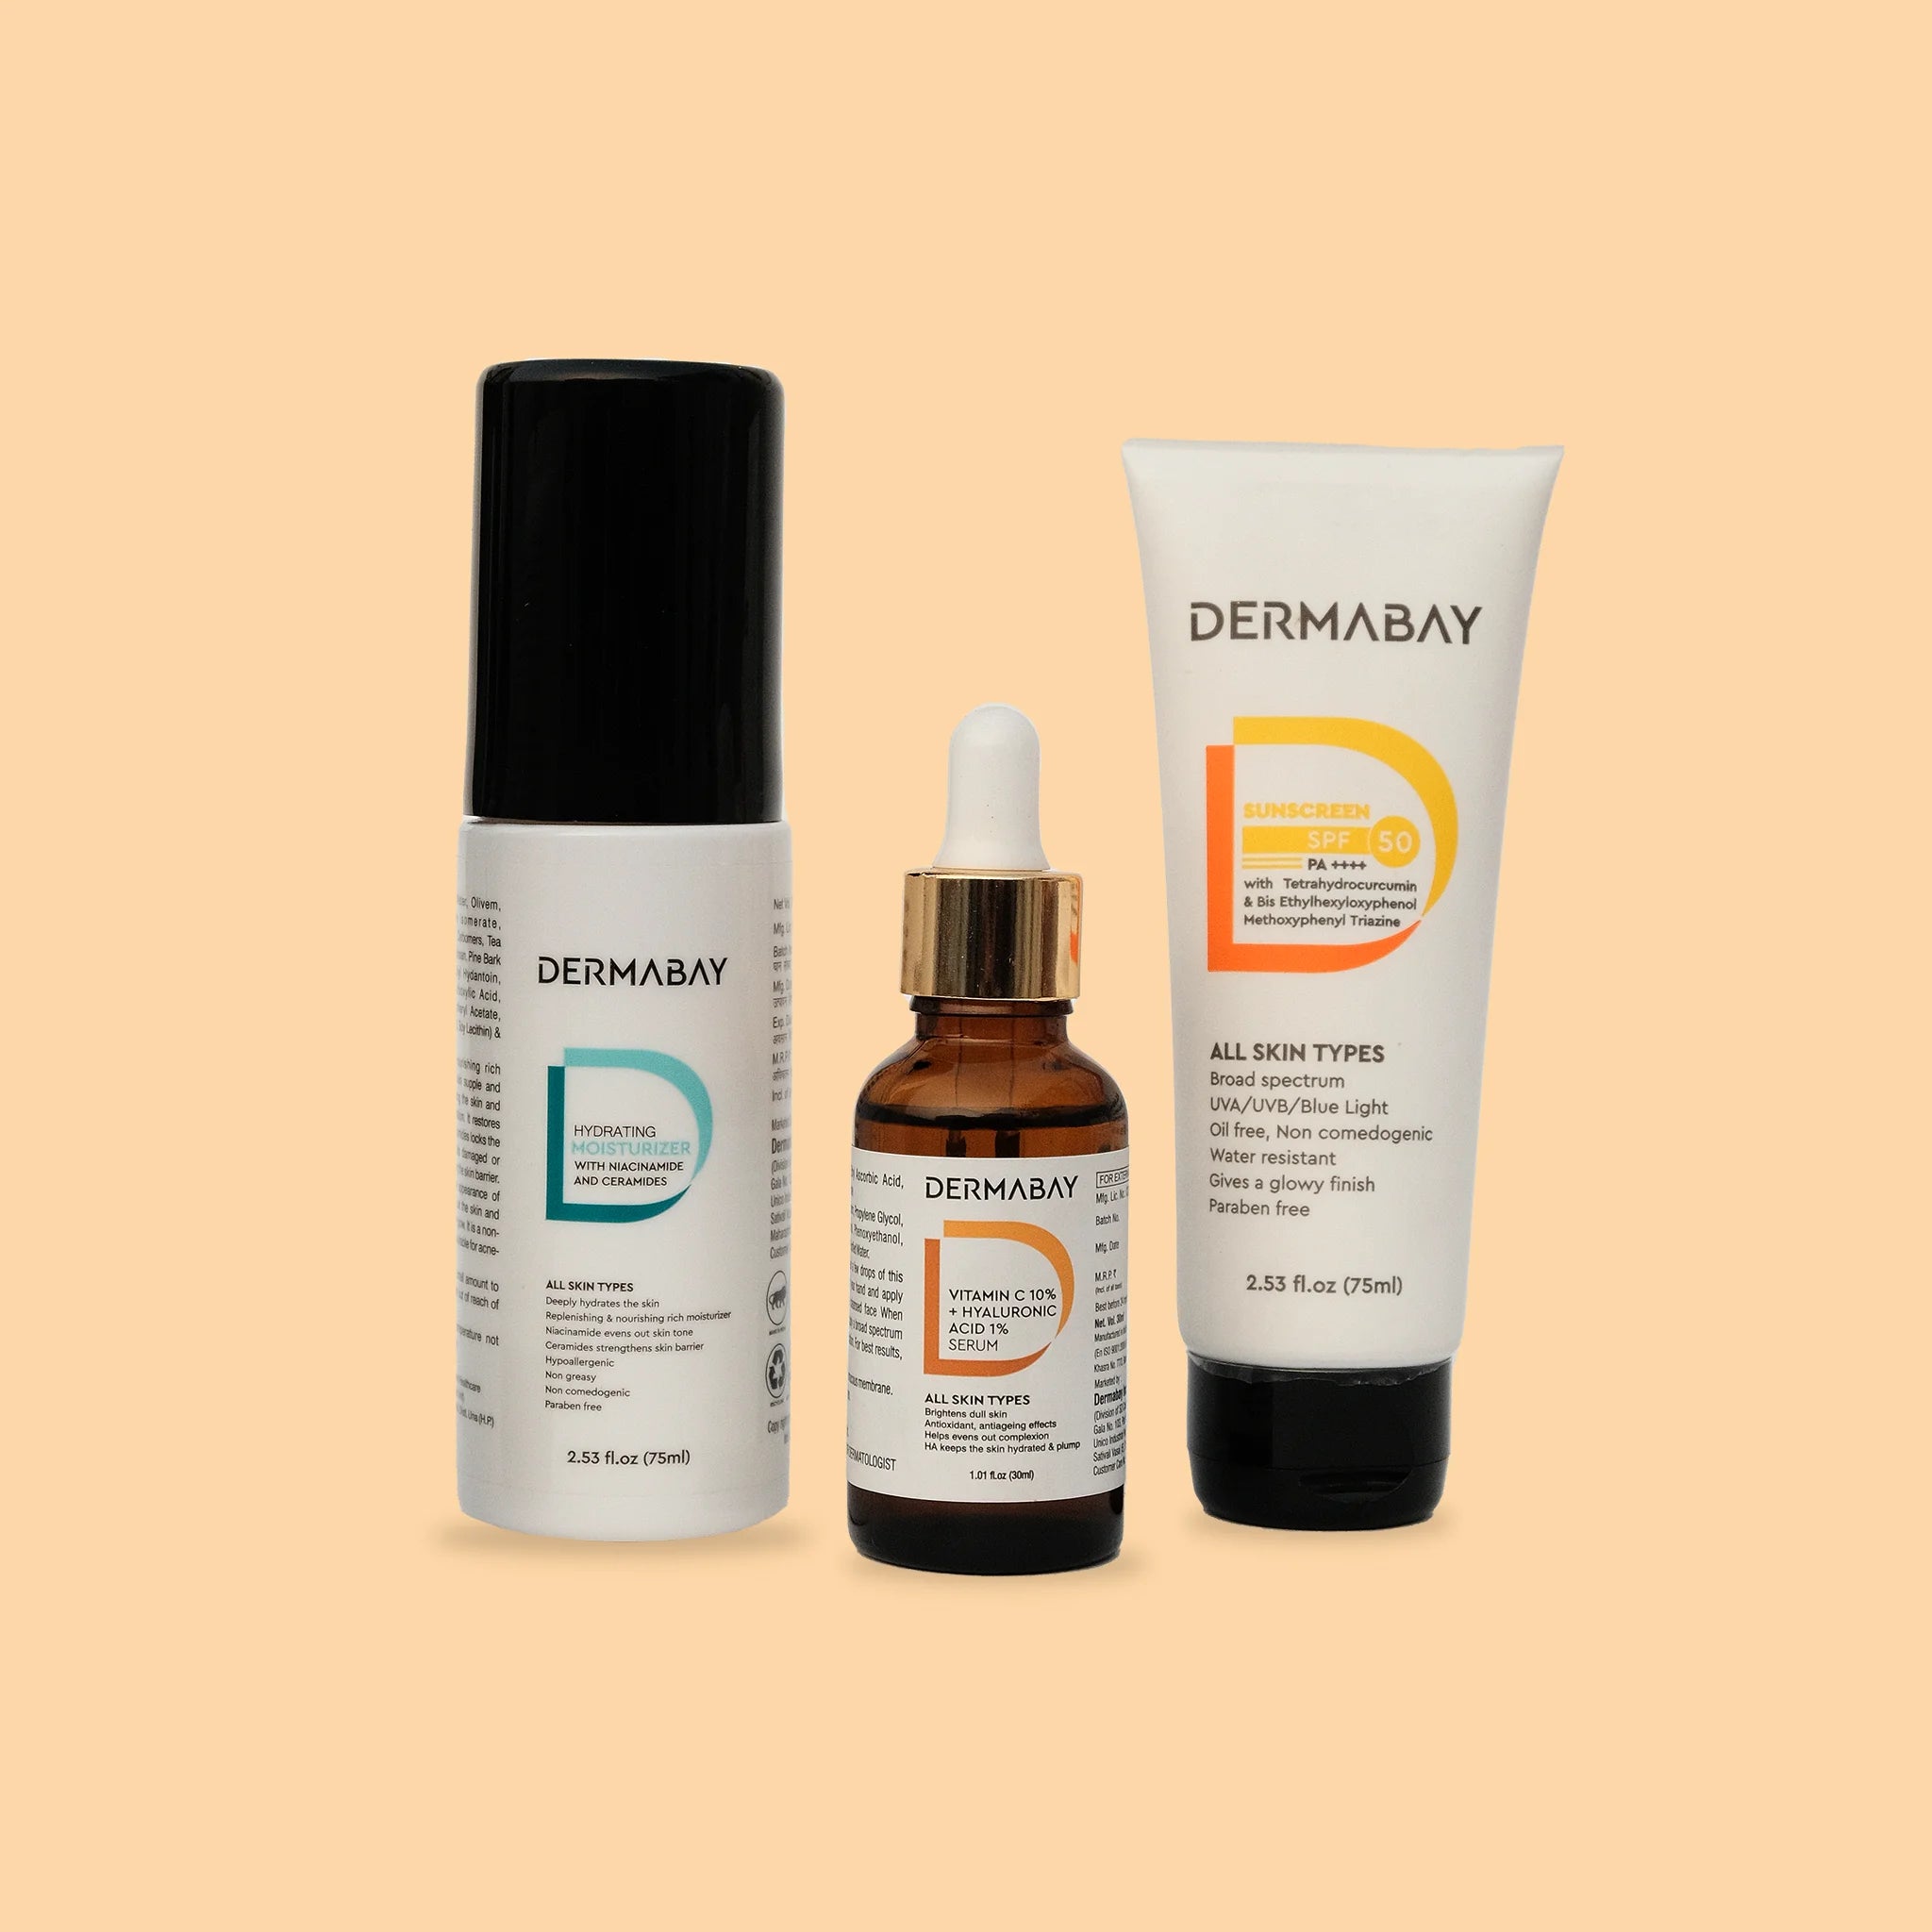 Dermabay Night Skincare Routine Combo